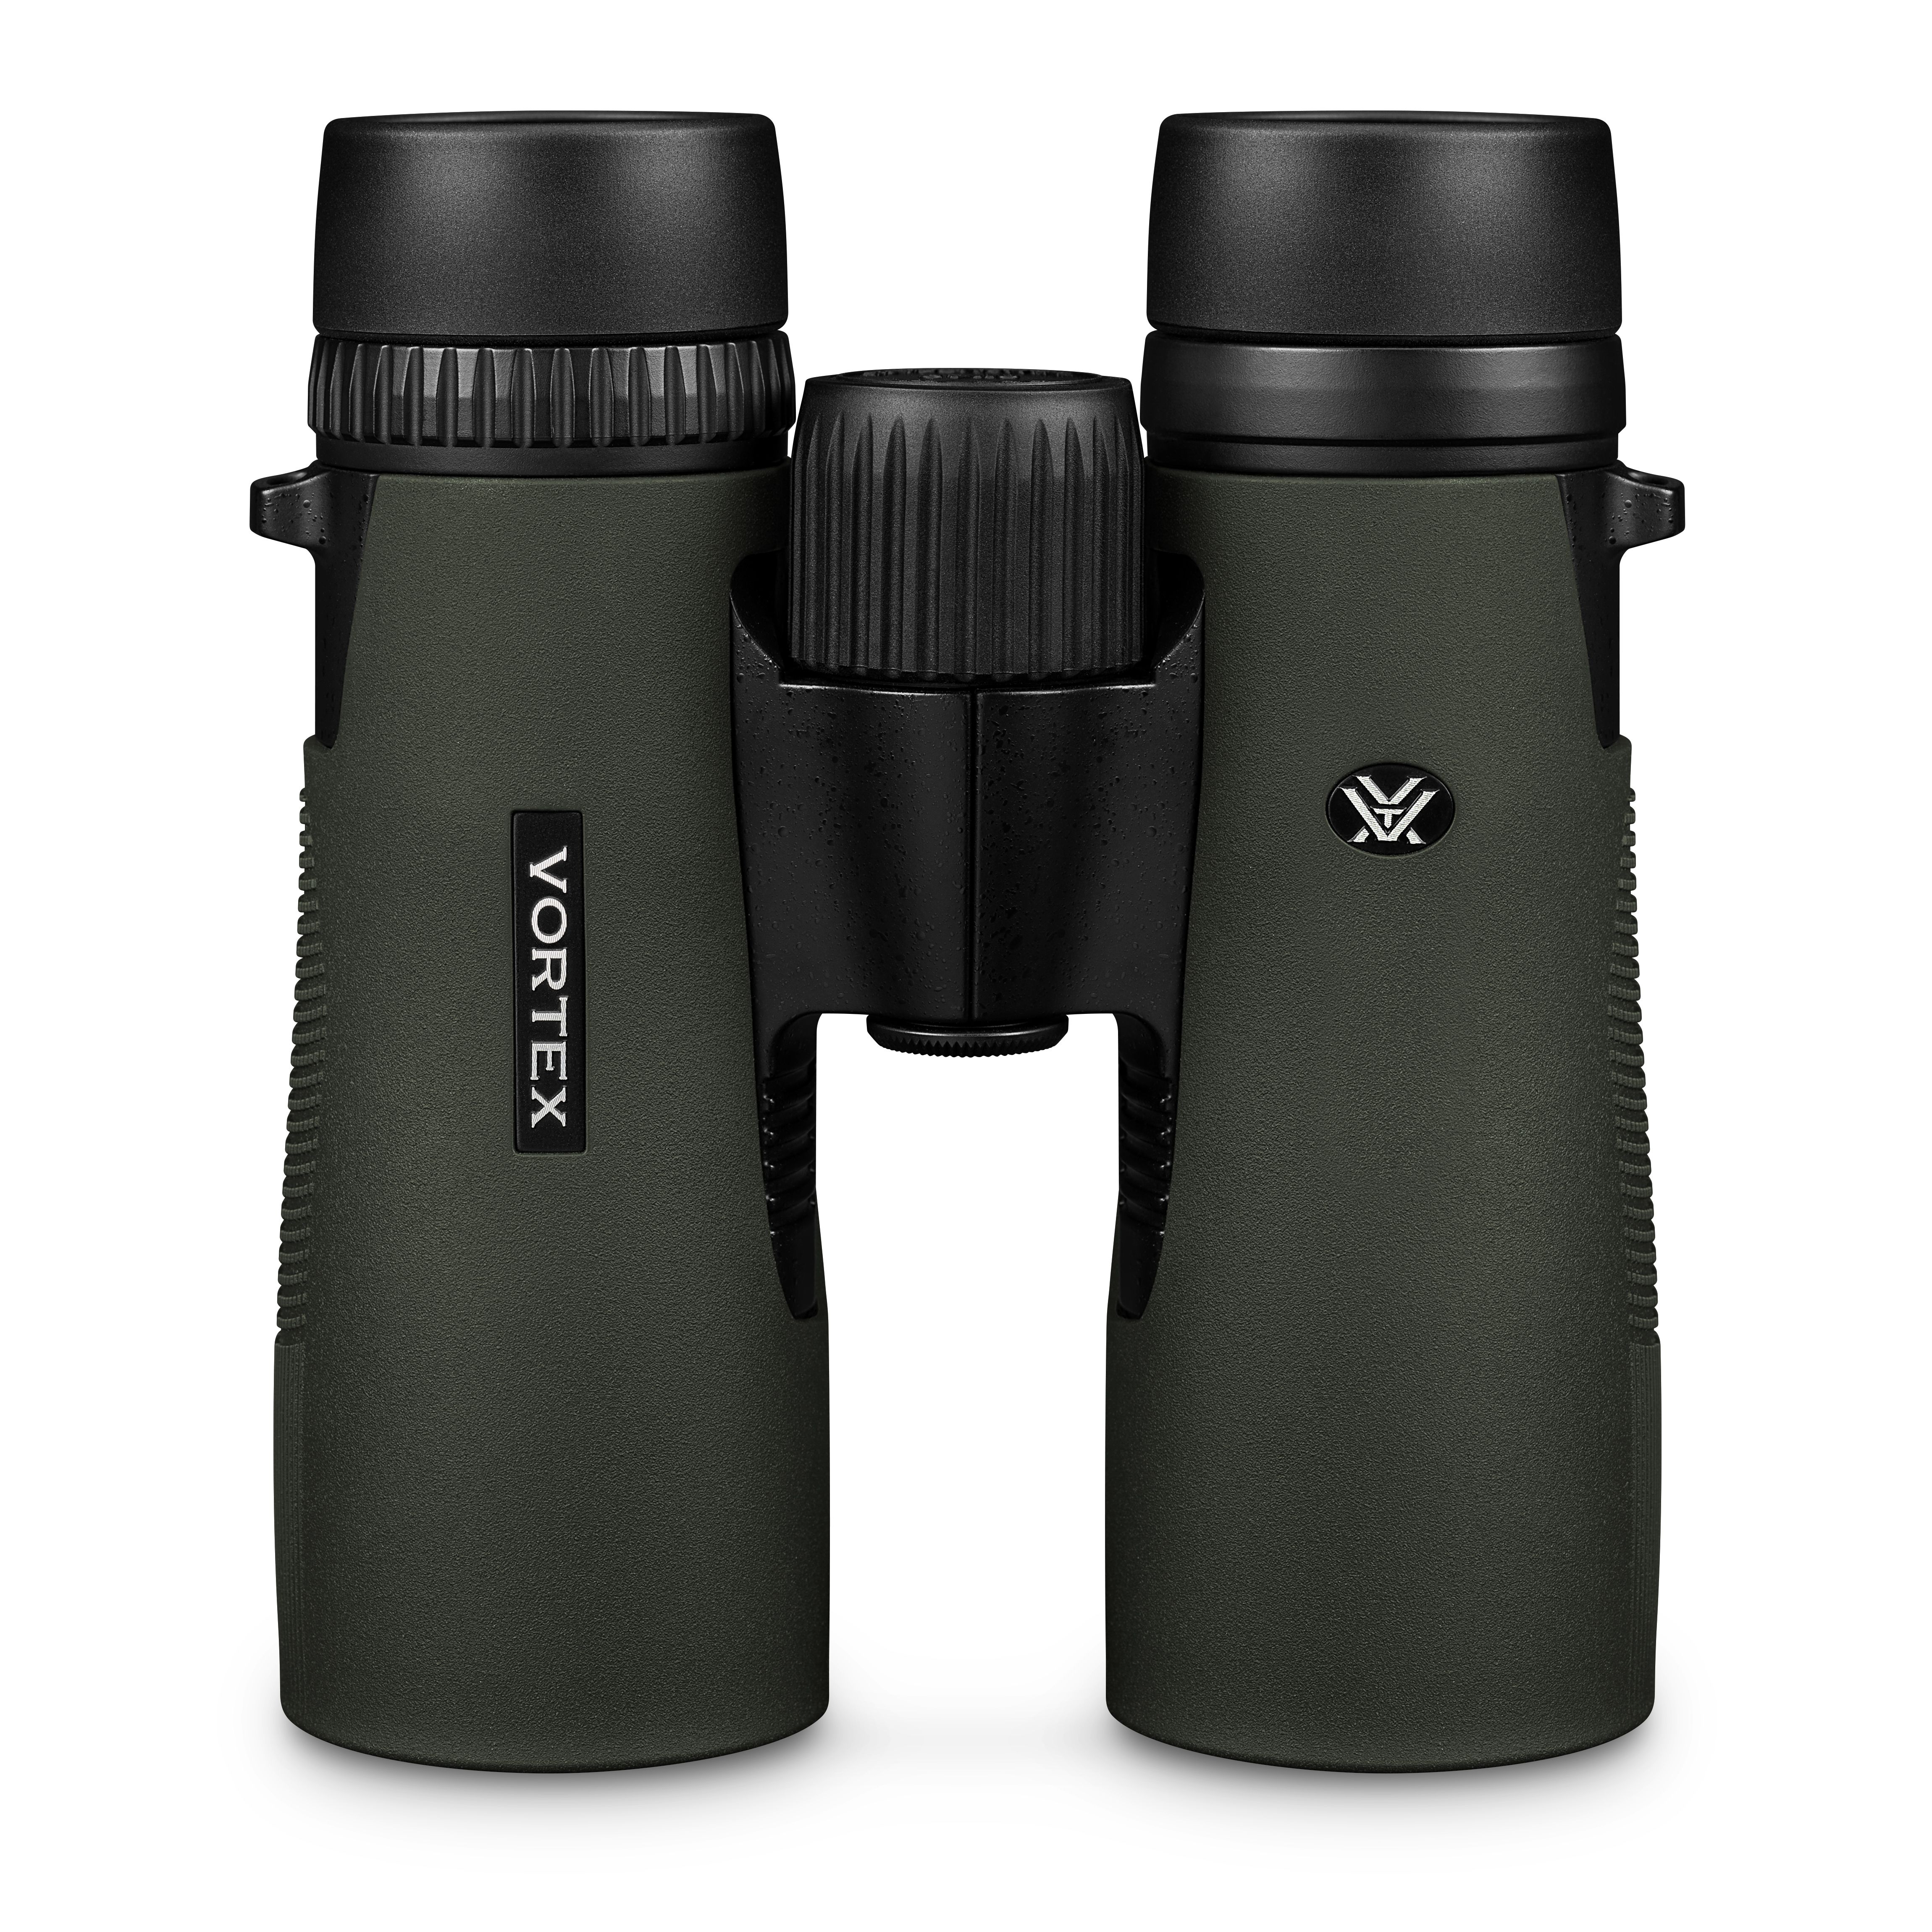 Vortex Diamondback HD 10x42mm Roof Prism Binoculars, ArmorTek, Green ...